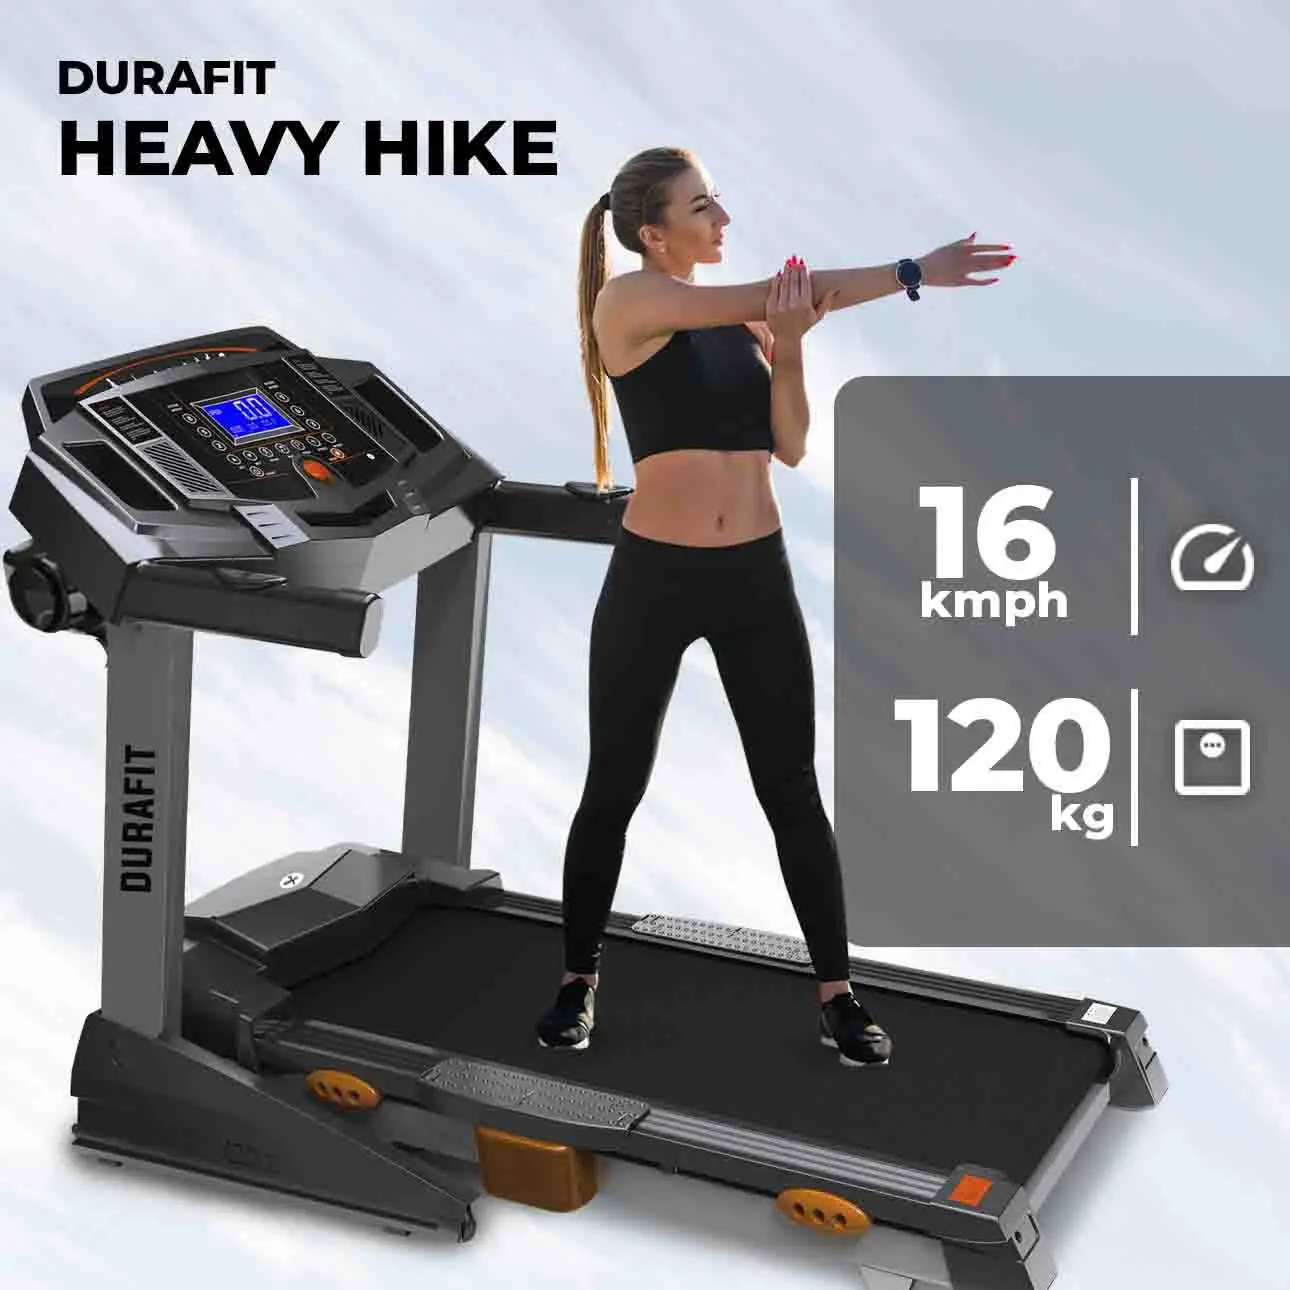 Durafit Heavy hike Treadmill